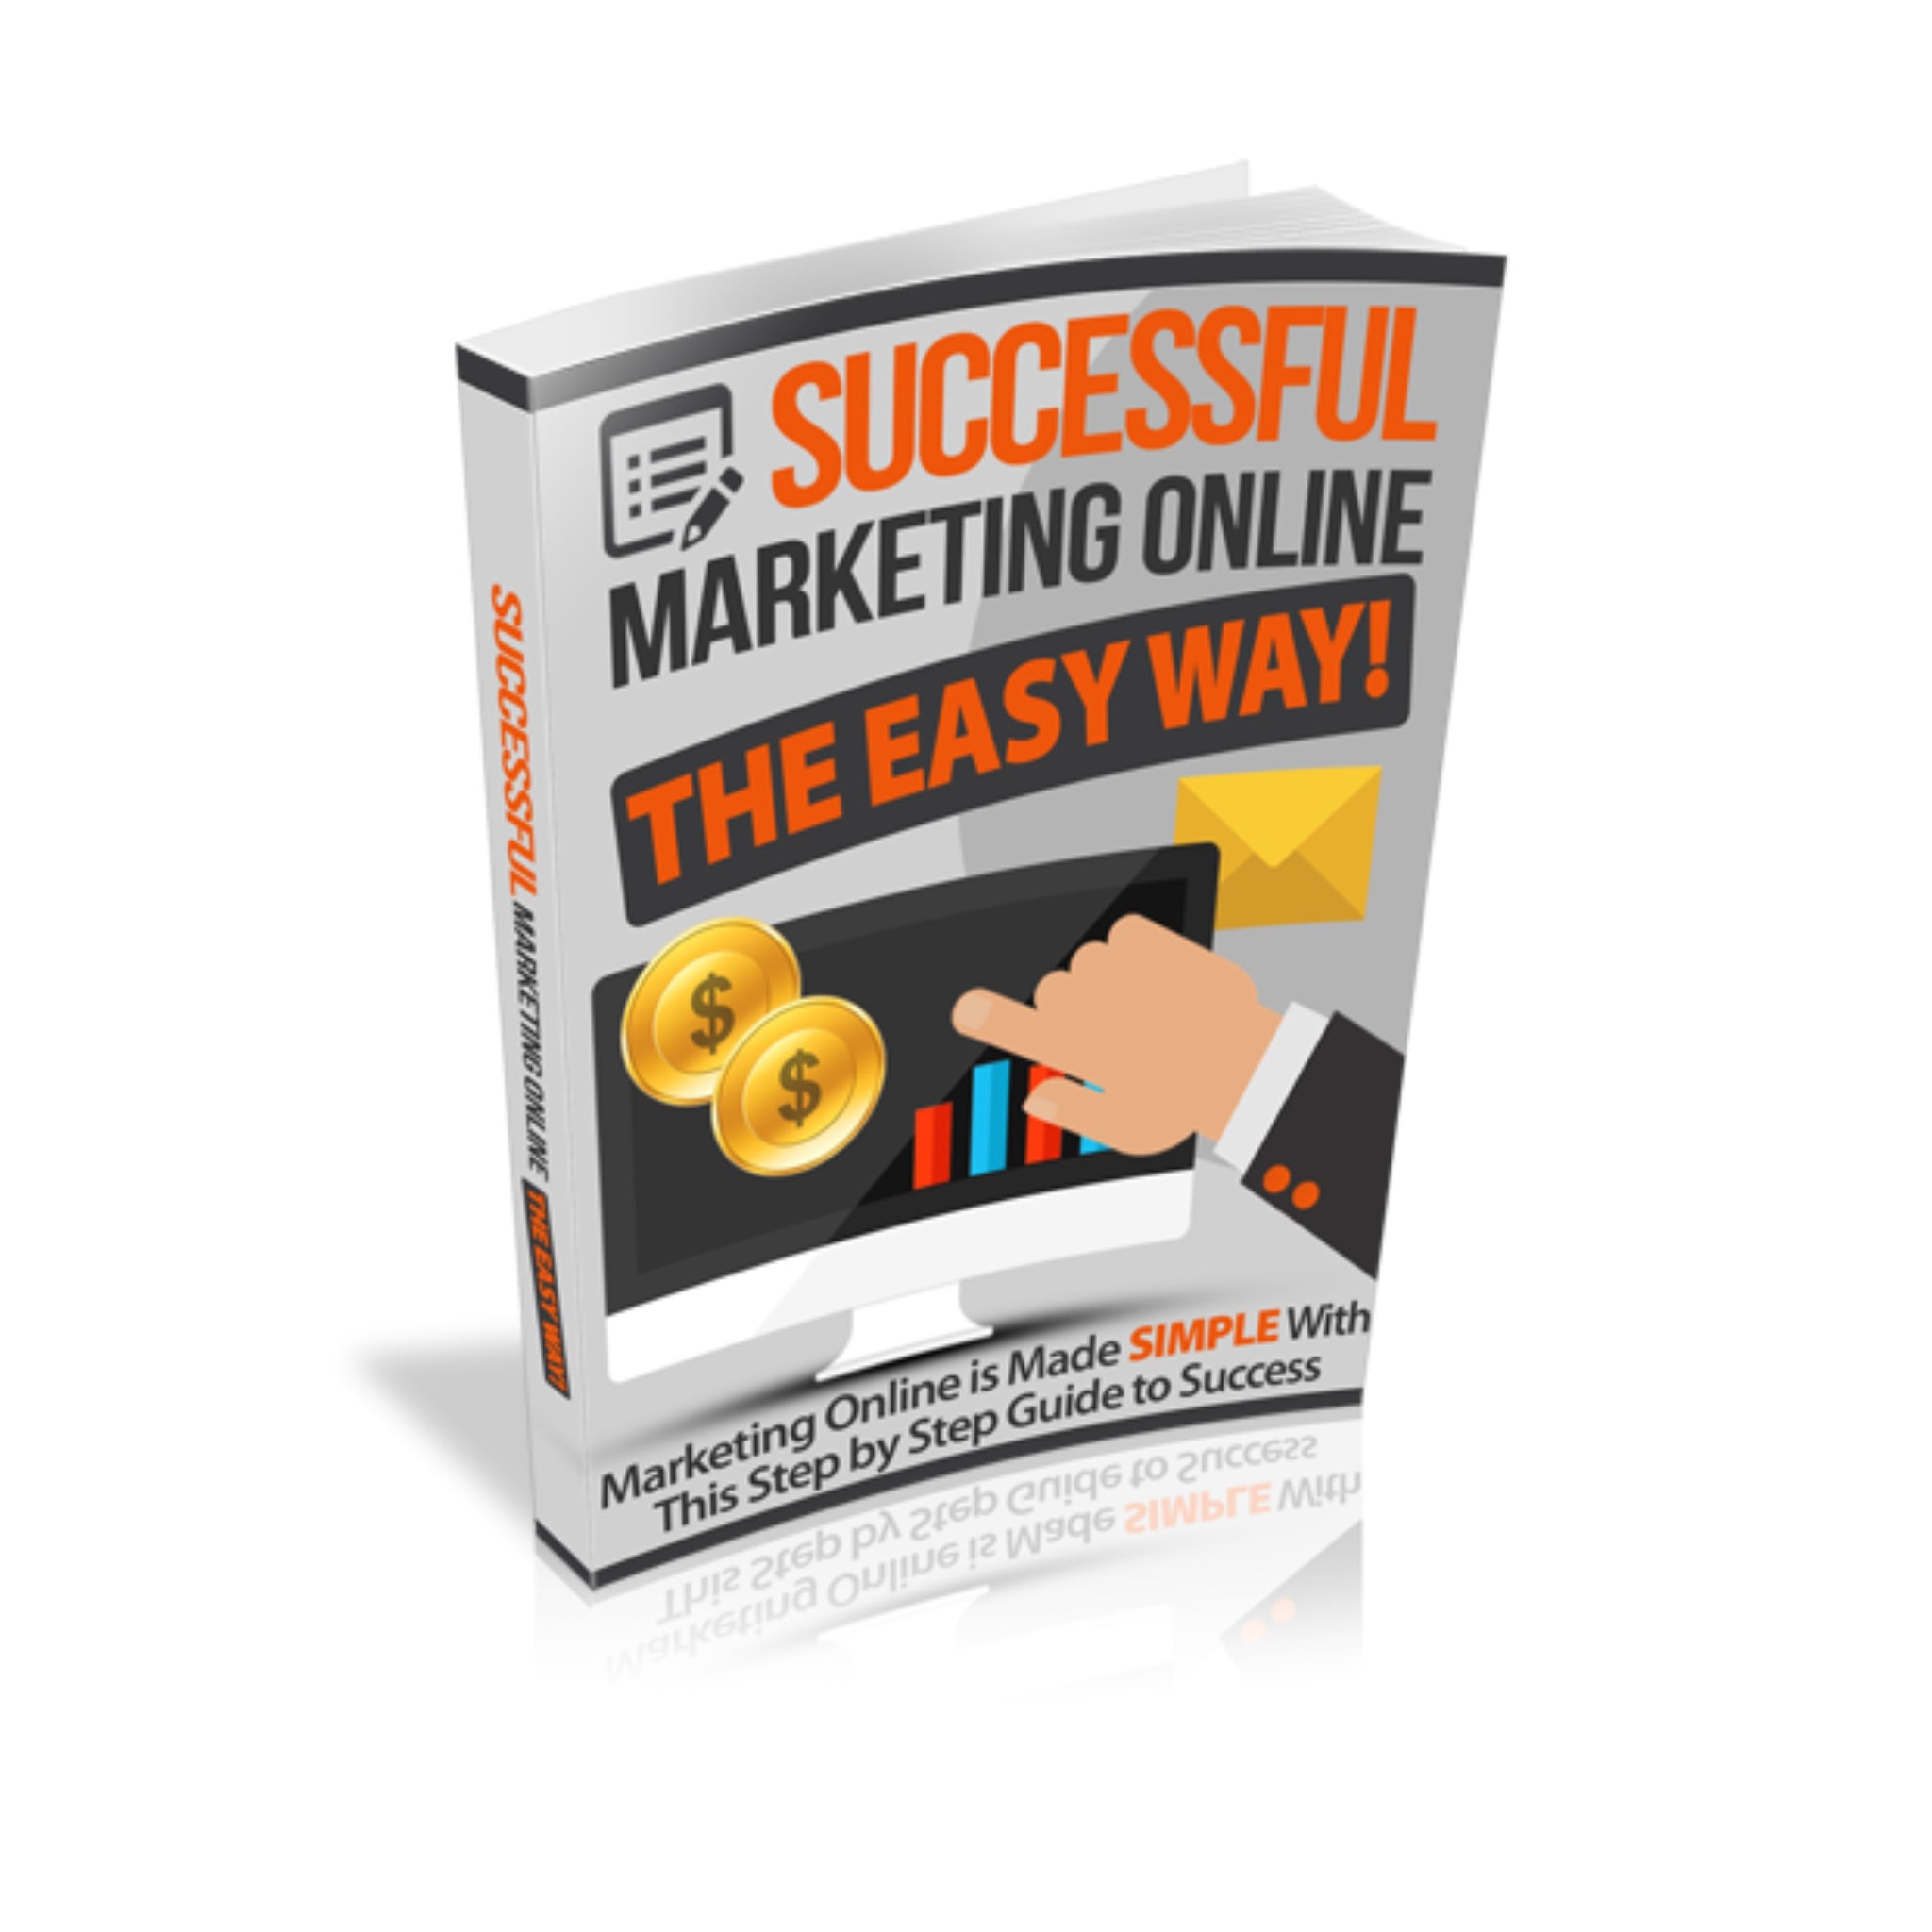 Successful Marketing Online Ebook